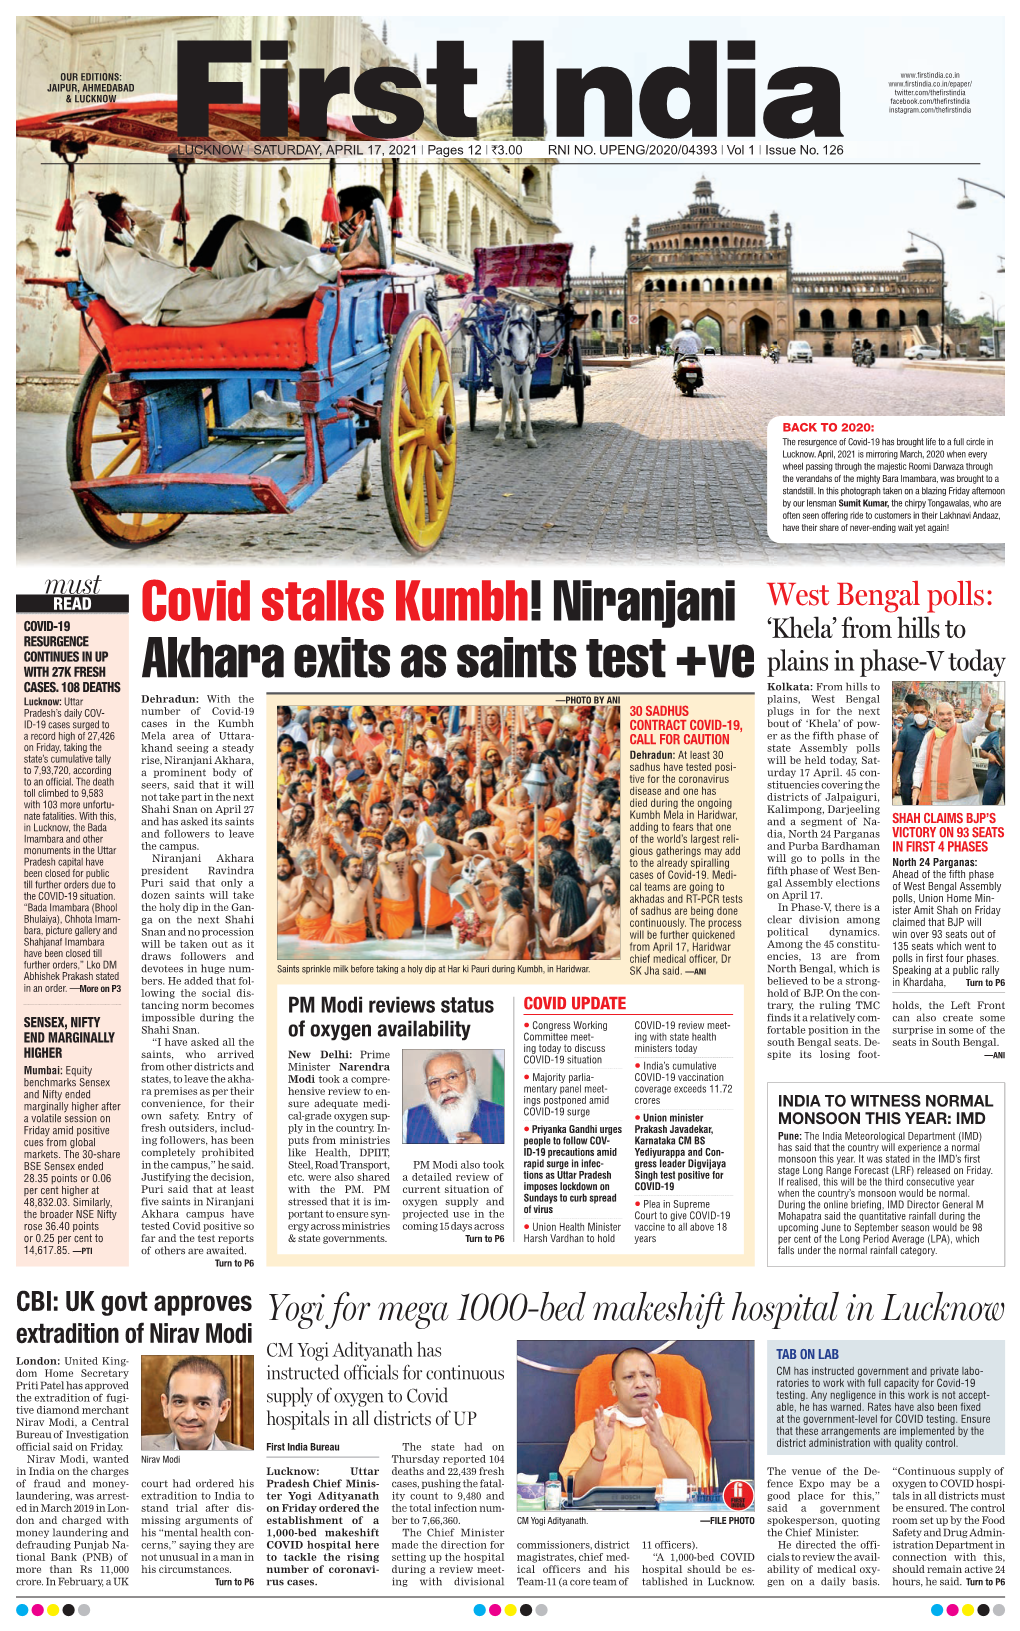 Covid Stalks Kumbh! Niranjani Akhara Exits As Saints Test